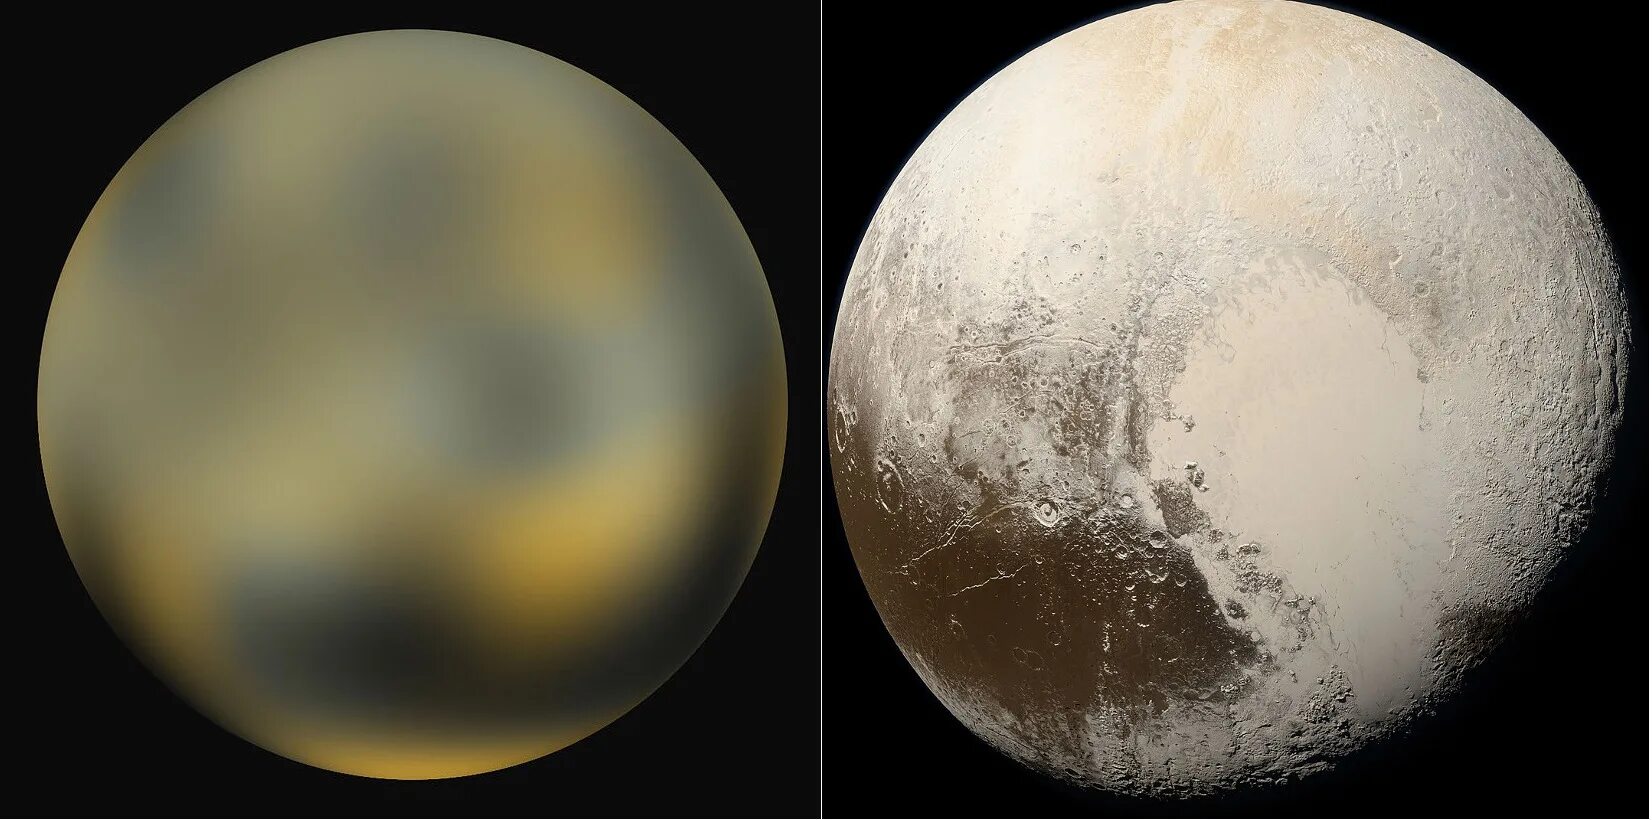 New Horizons Pluto снимки. NASA New Horizons Плутон. Снимки Плутона New Horizons. Снимки Плутона Хаббл. Плутон сейчас